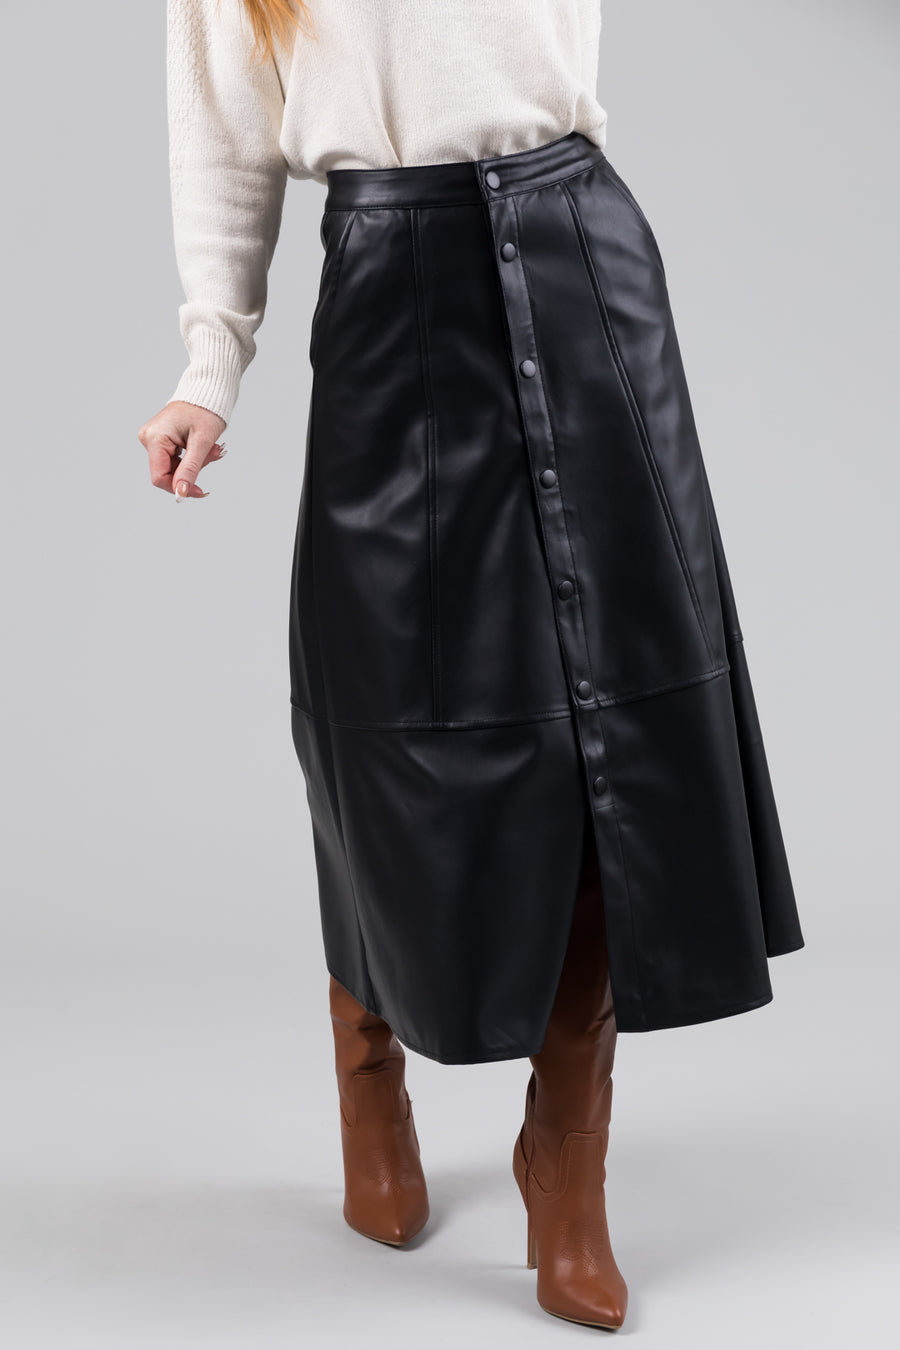 KanCan Black Button Down Faux Leather Midi Skirt